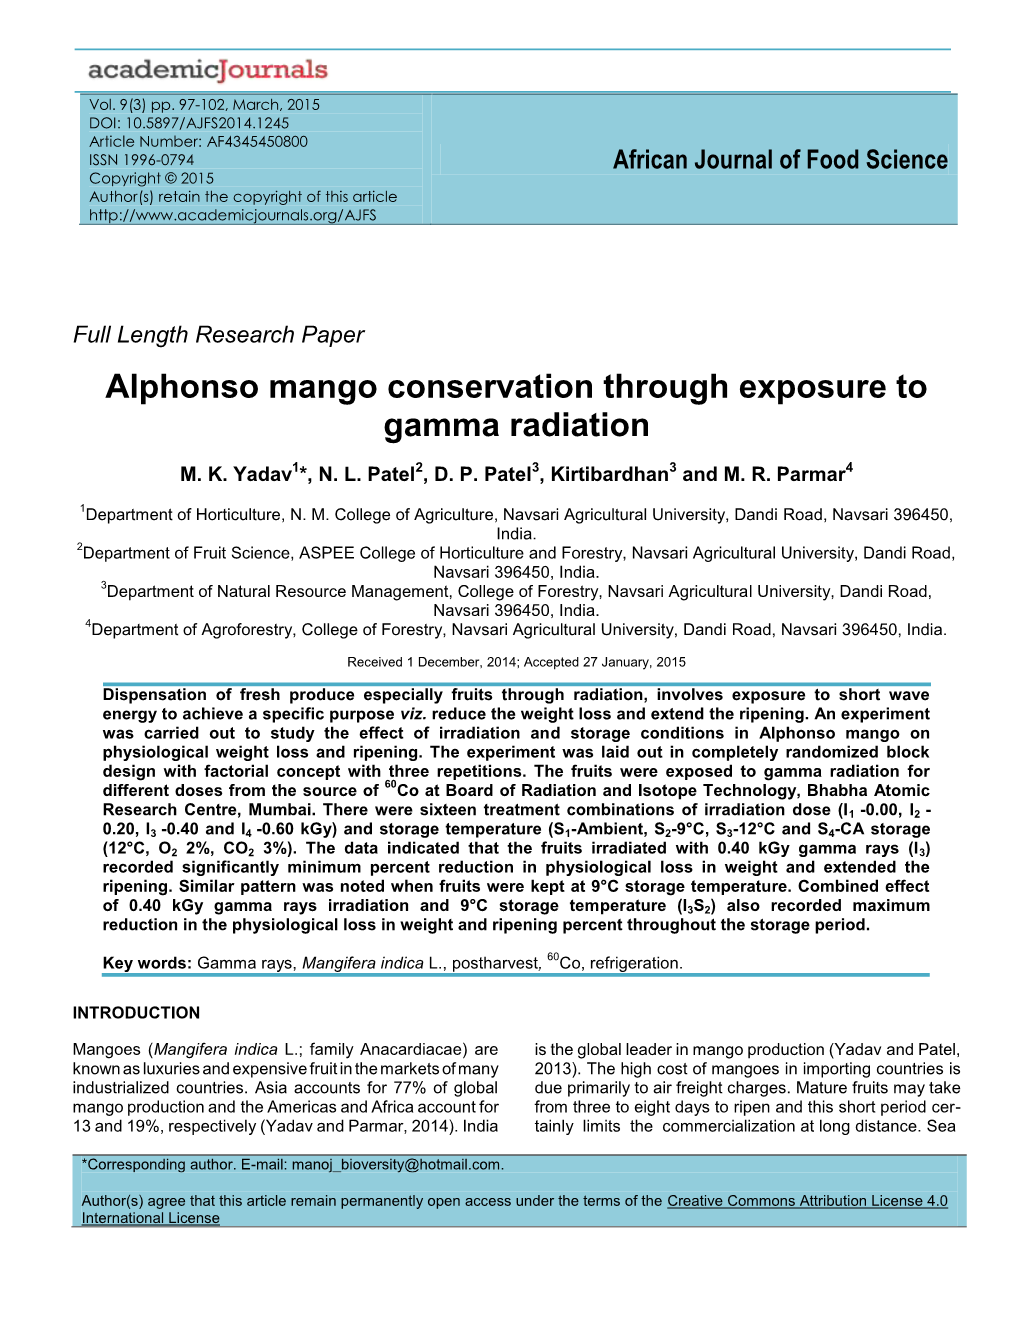 Alphonso Mango Conservation Through Exposure to Gamma Radiation